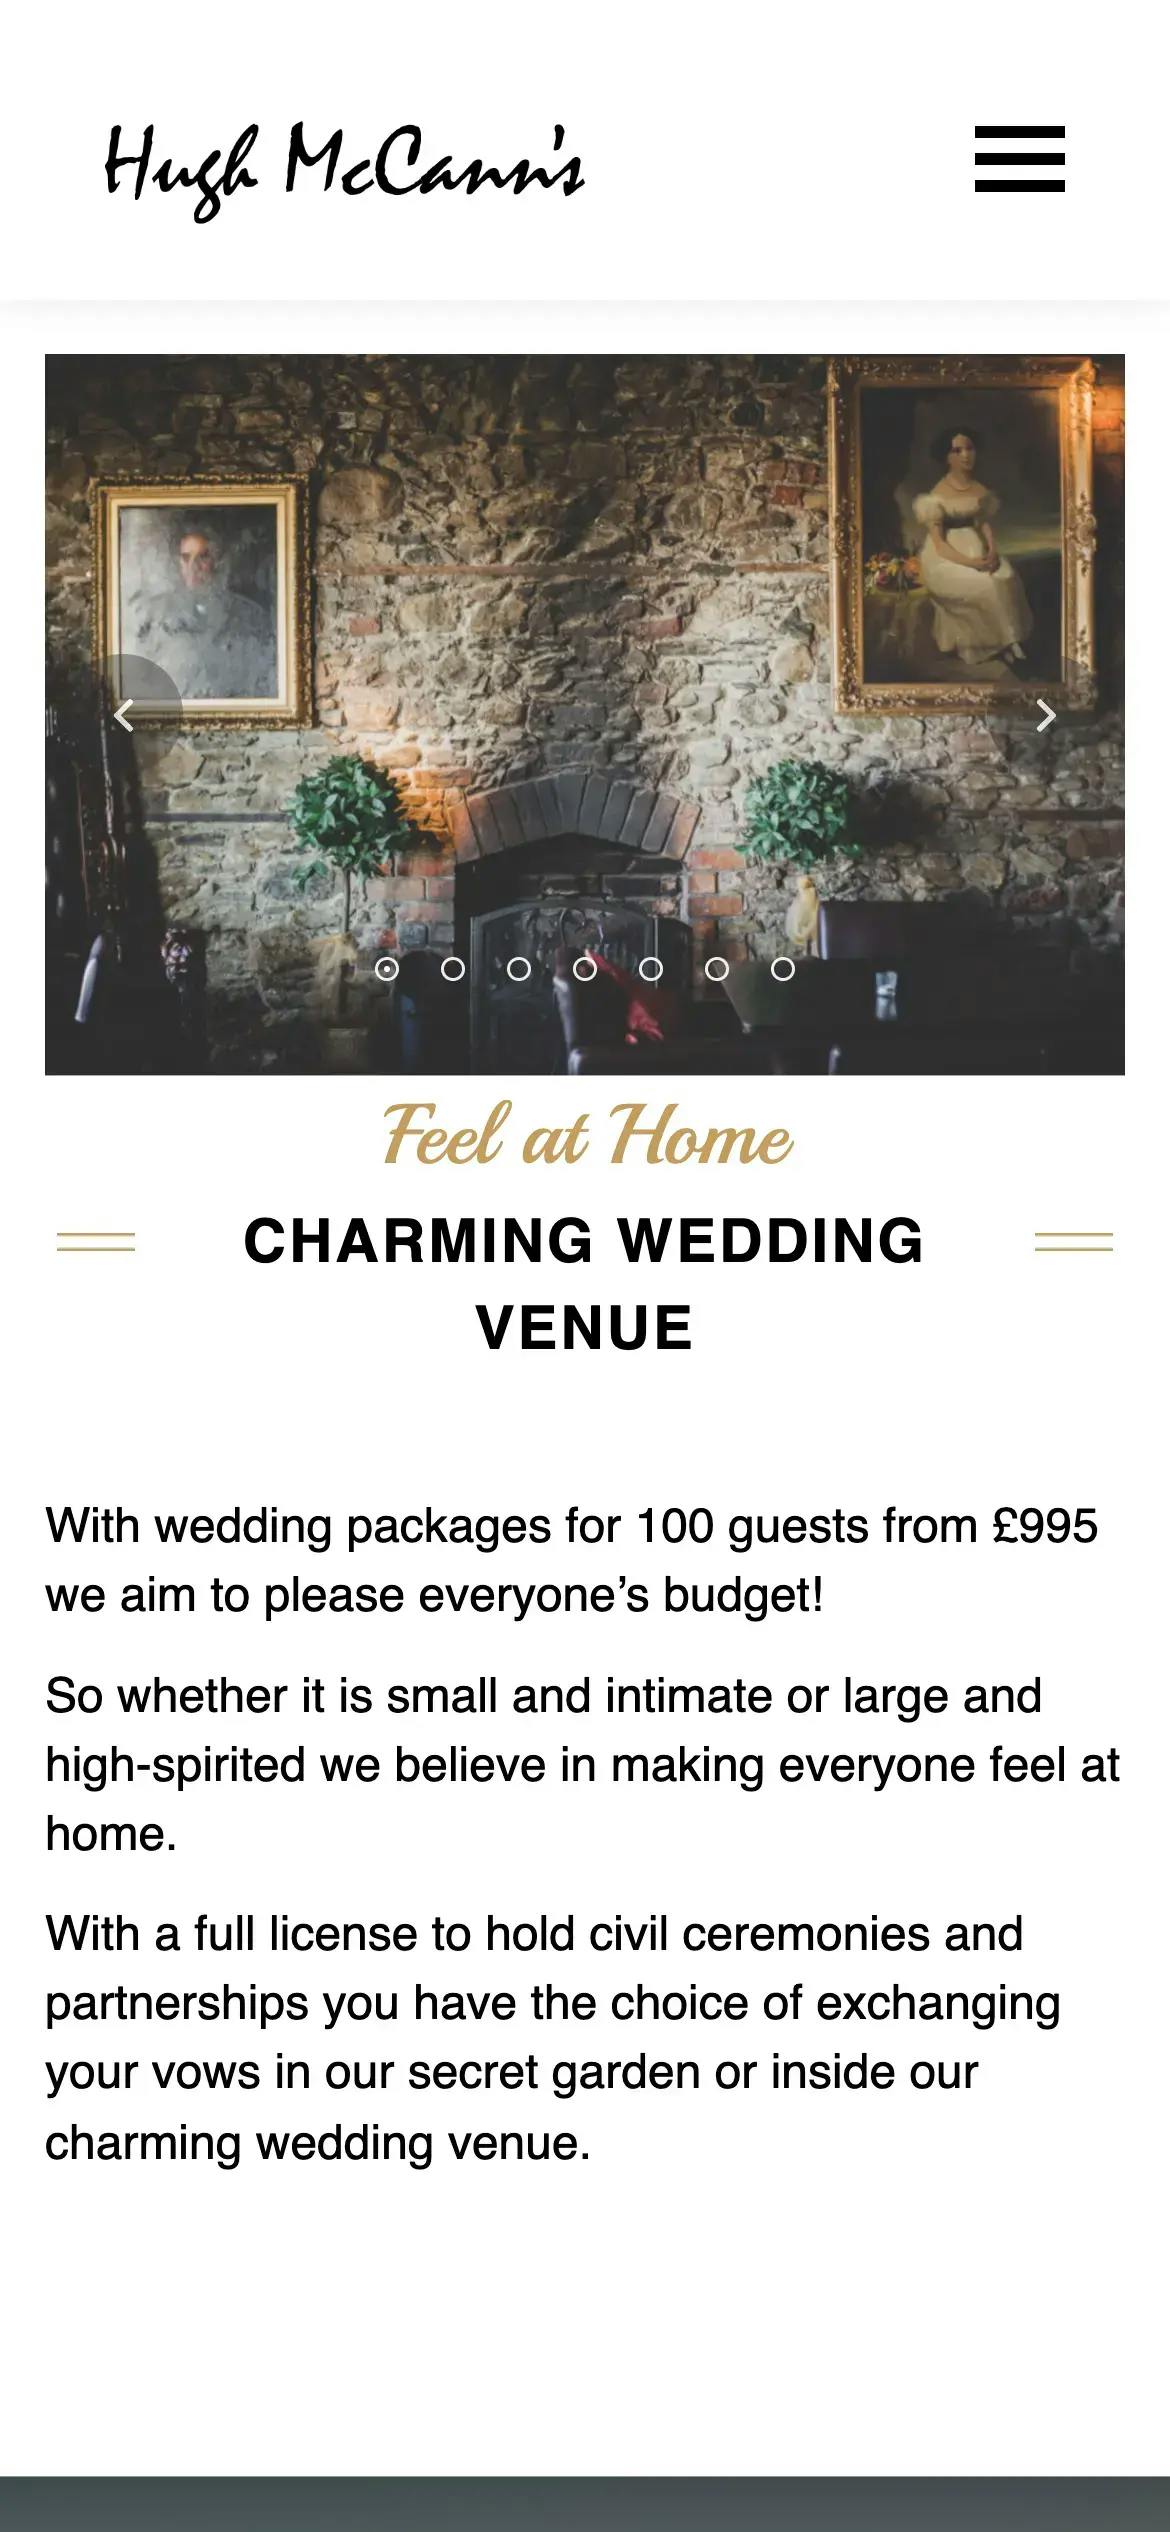 Hugh McCann's wedding page web design on mobile